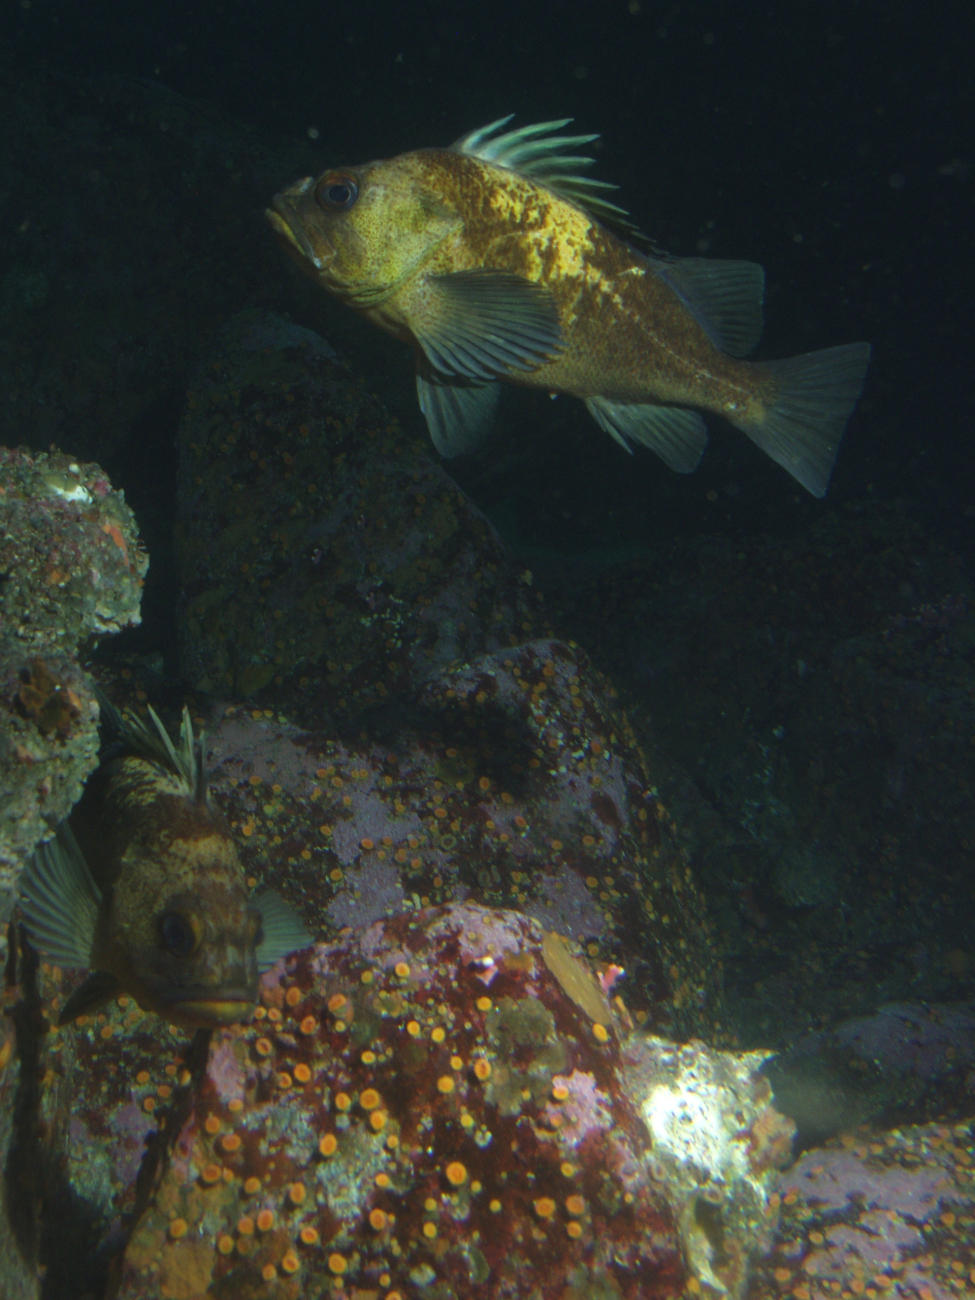 Quillback rockfish (Sebastes maliger) at 30 meters depth